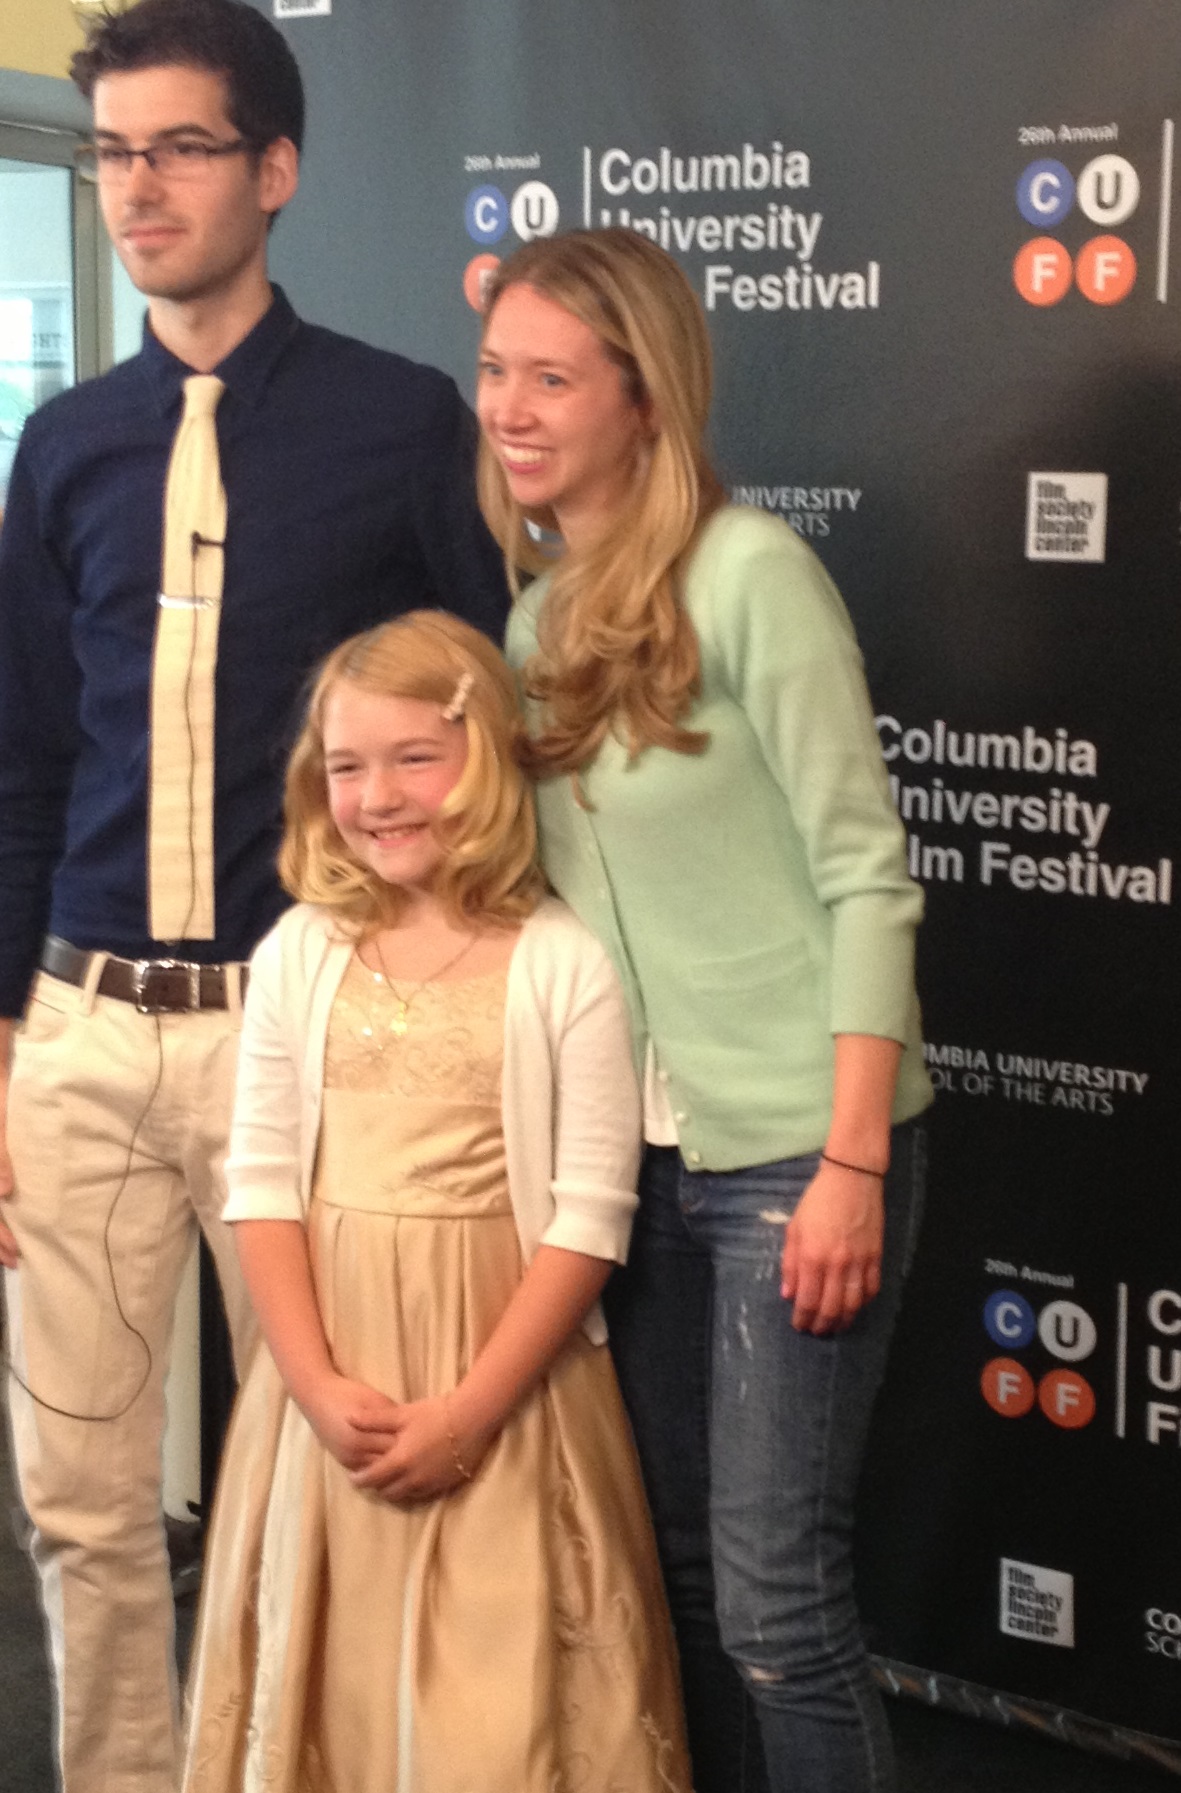 Madeline Lupi at the Columbia University Film Festival with Marvelous Fishman Producer Benjamin Rubin.